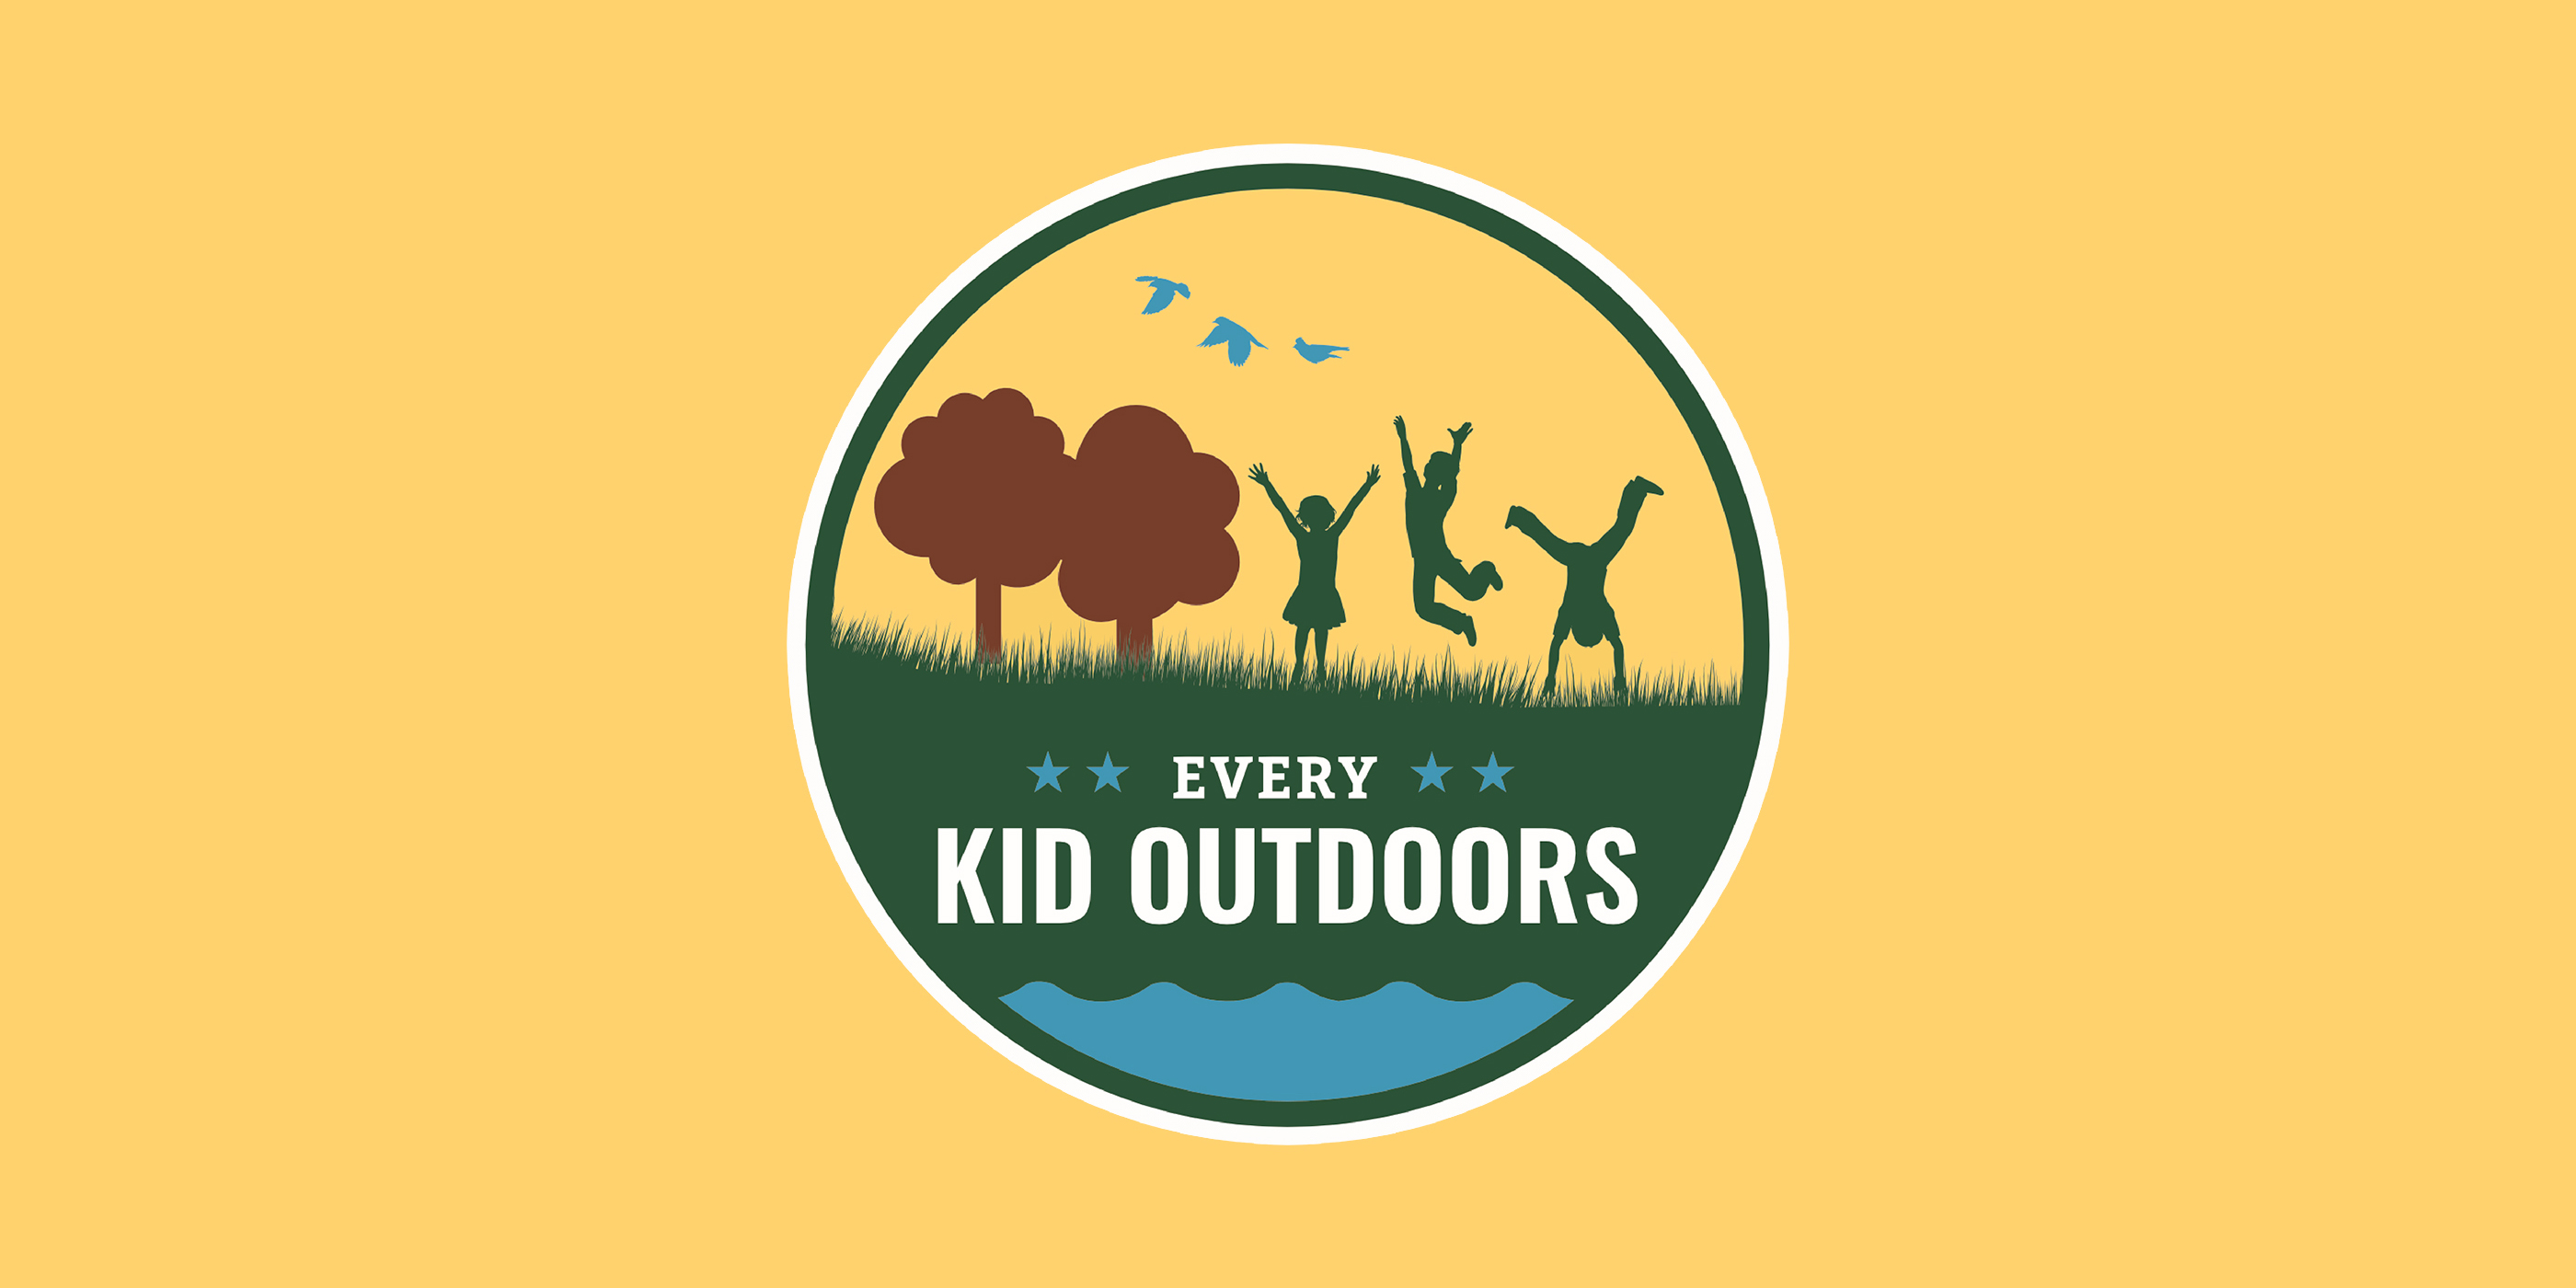 Logo showing kids having fun in the outdoors